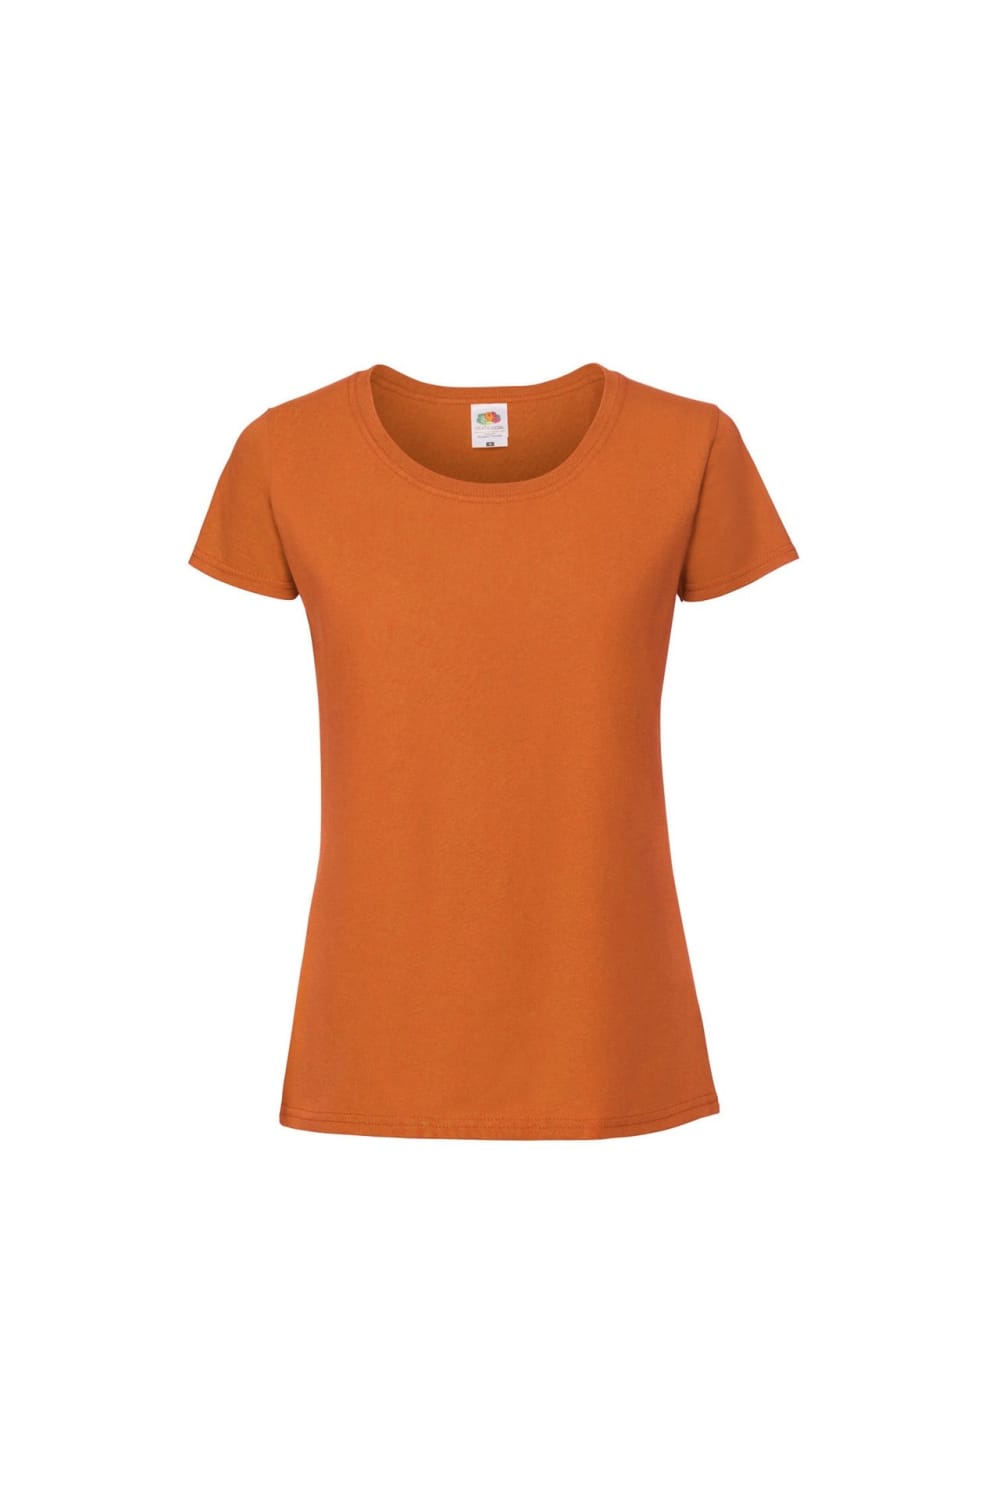 Womens/Ladies Ringspun Premium T-Shirt - Bright Orange